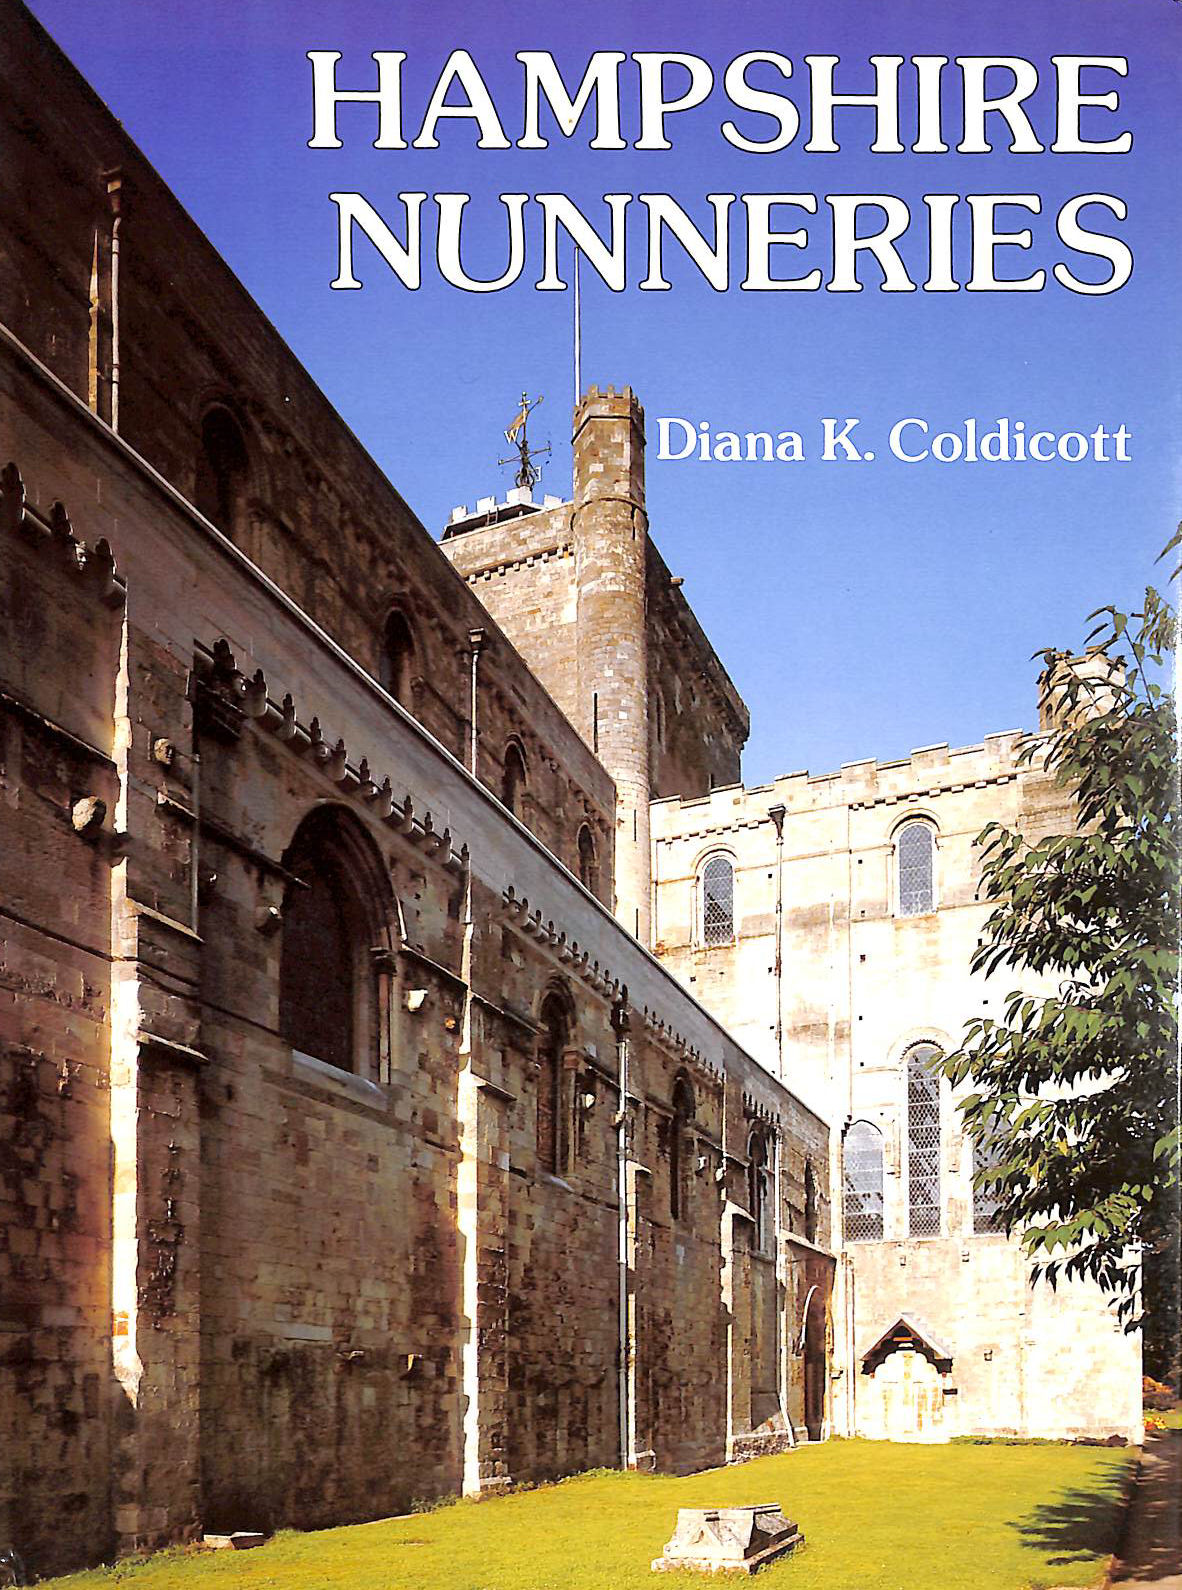 COLDICOTT, DIANA K. - Hampshire Nunneries